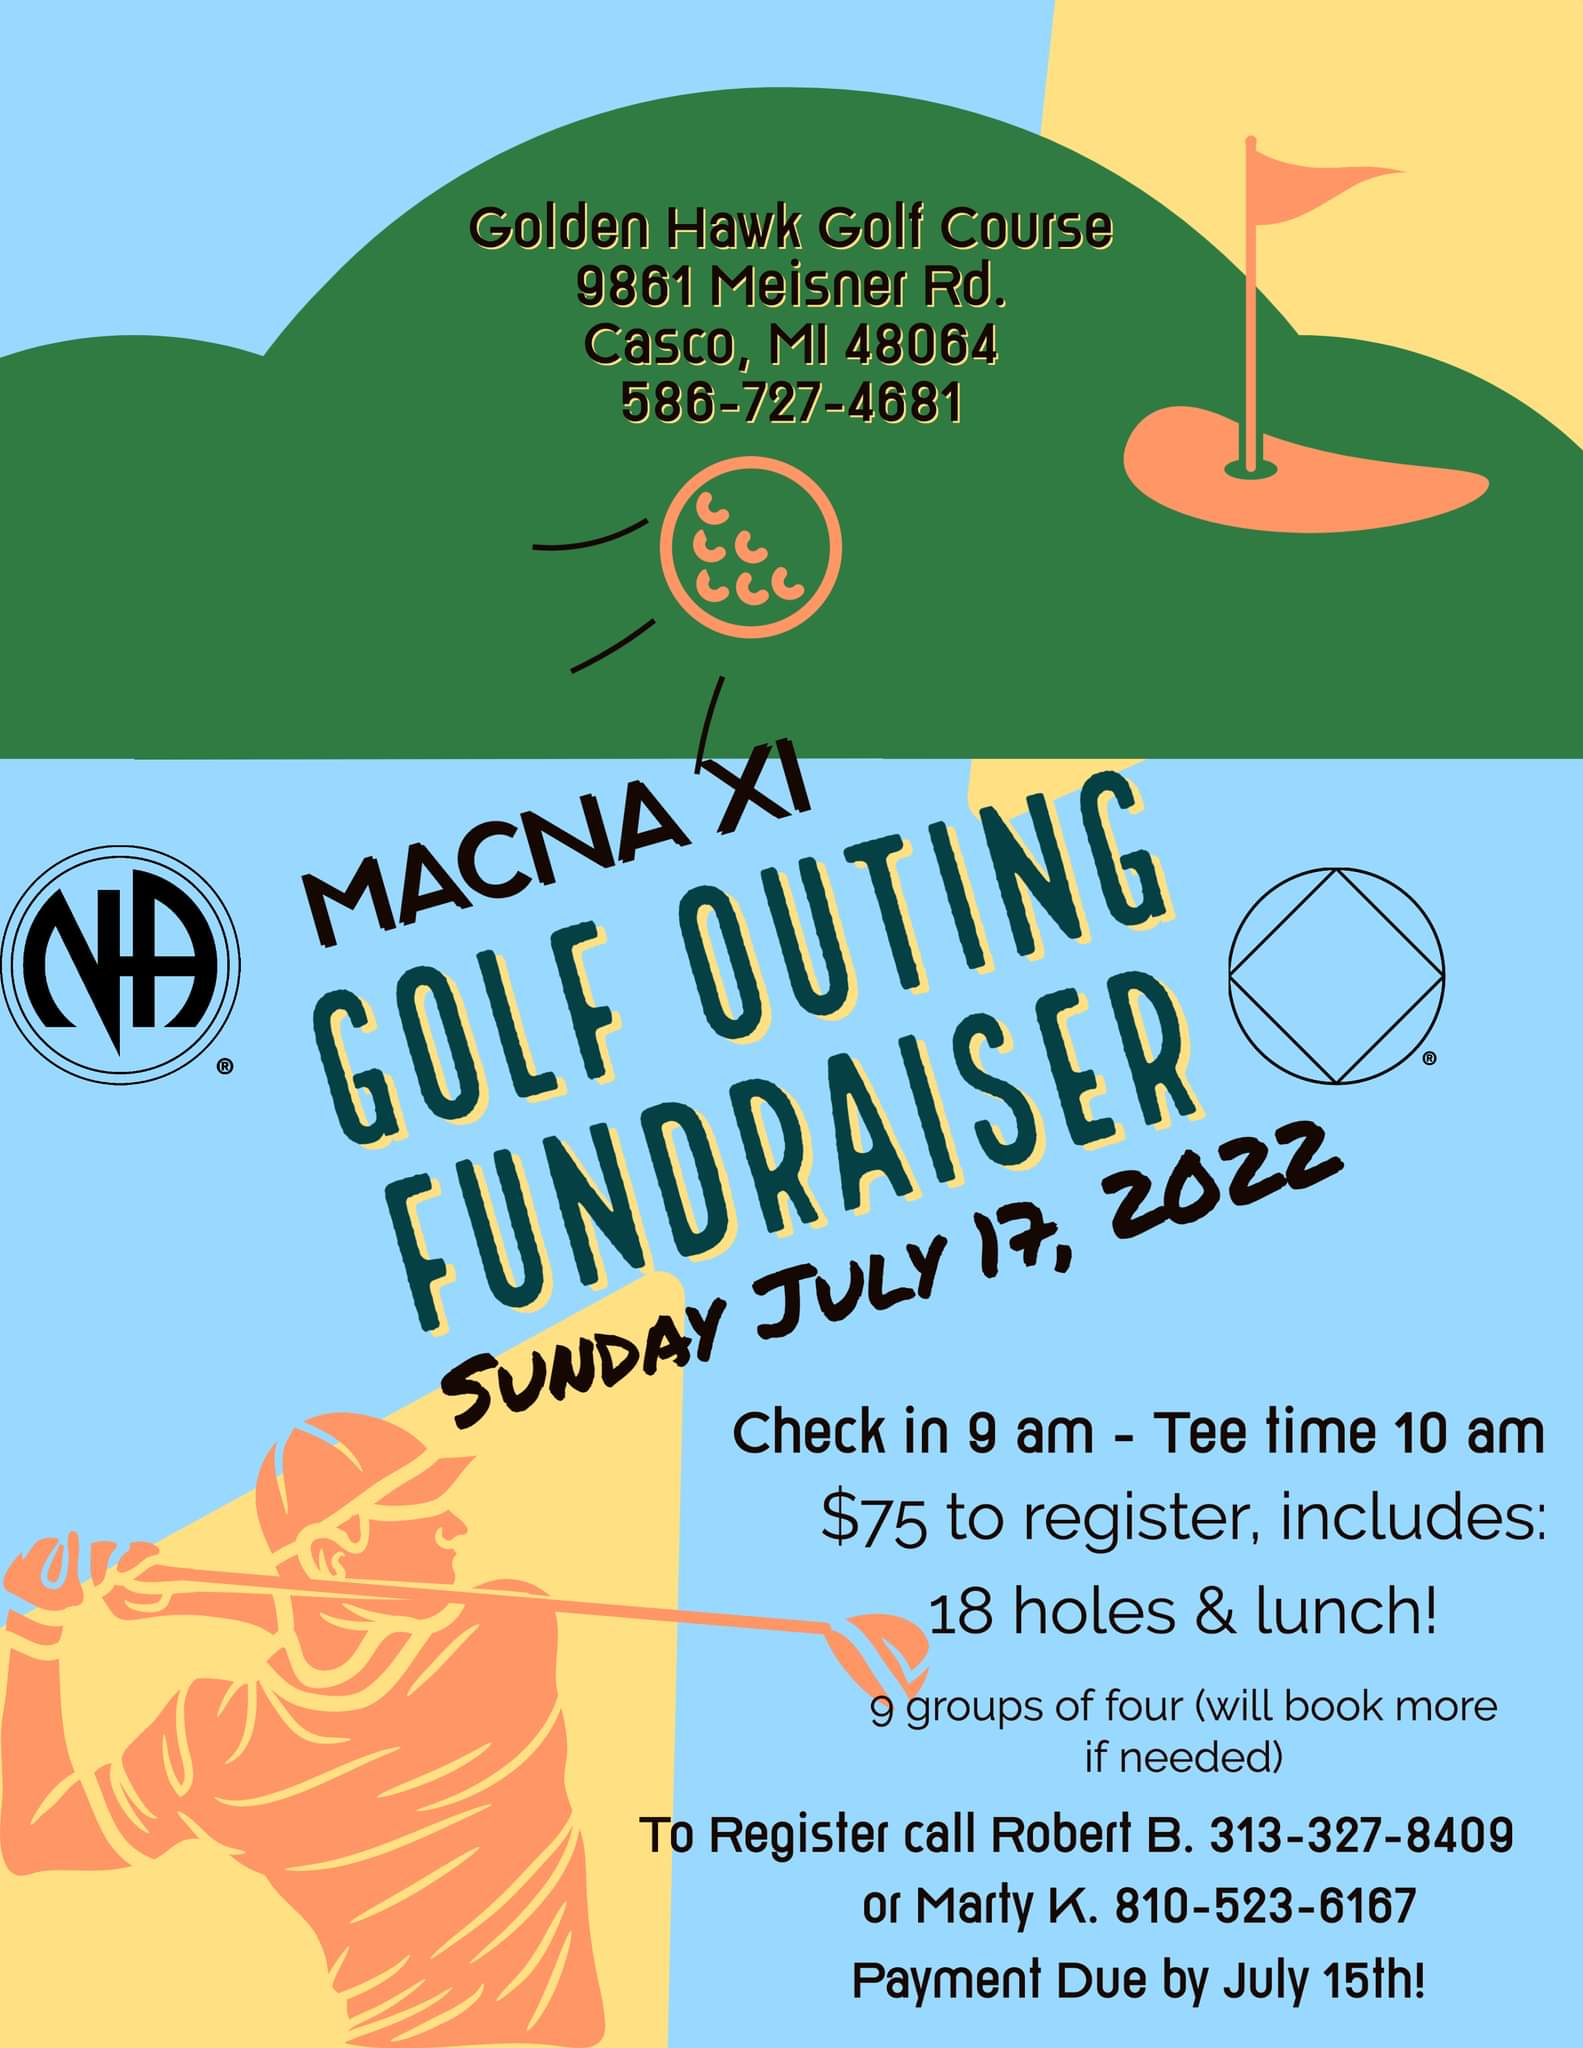 Golf Outing Fundraiser @ Golden Hawk Golf Course | Casco | Michigan | United States